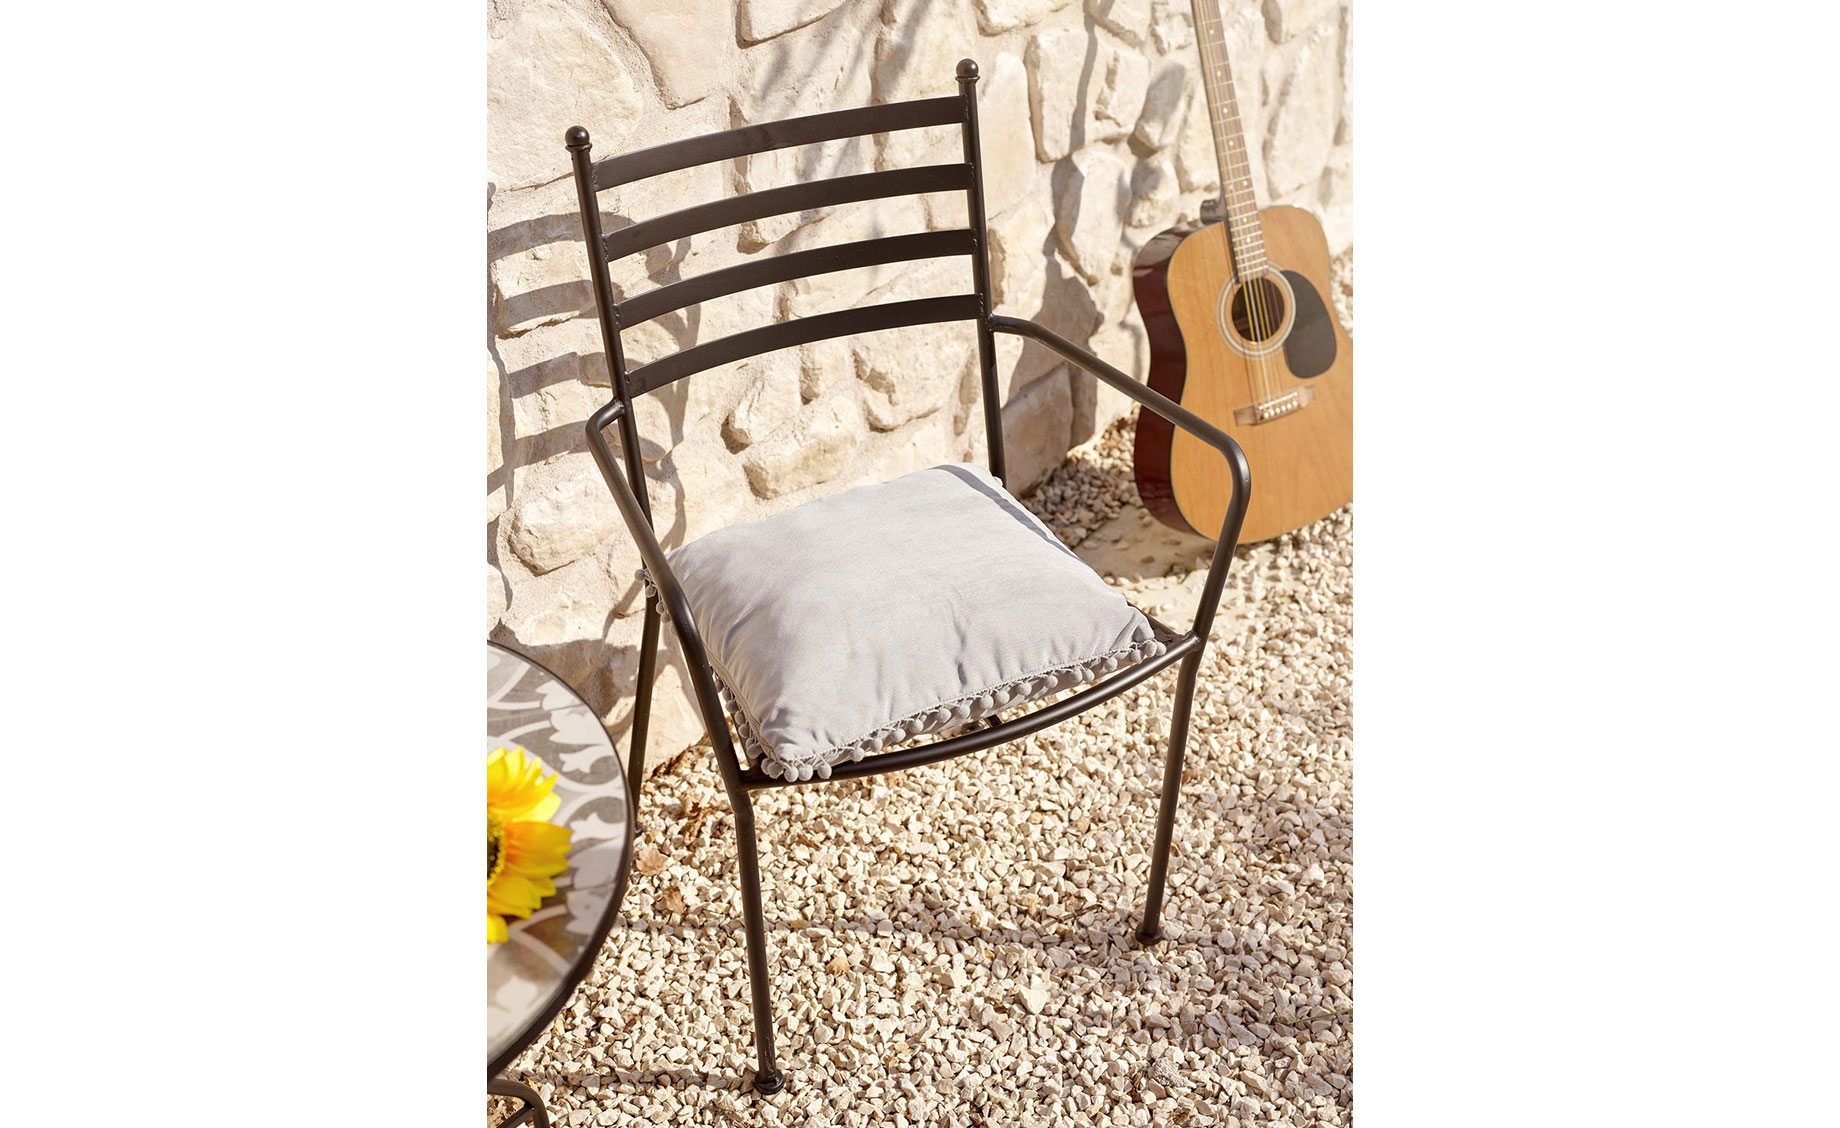 Alina stolica s rukonaslonima 47x44x93 cm crni metal